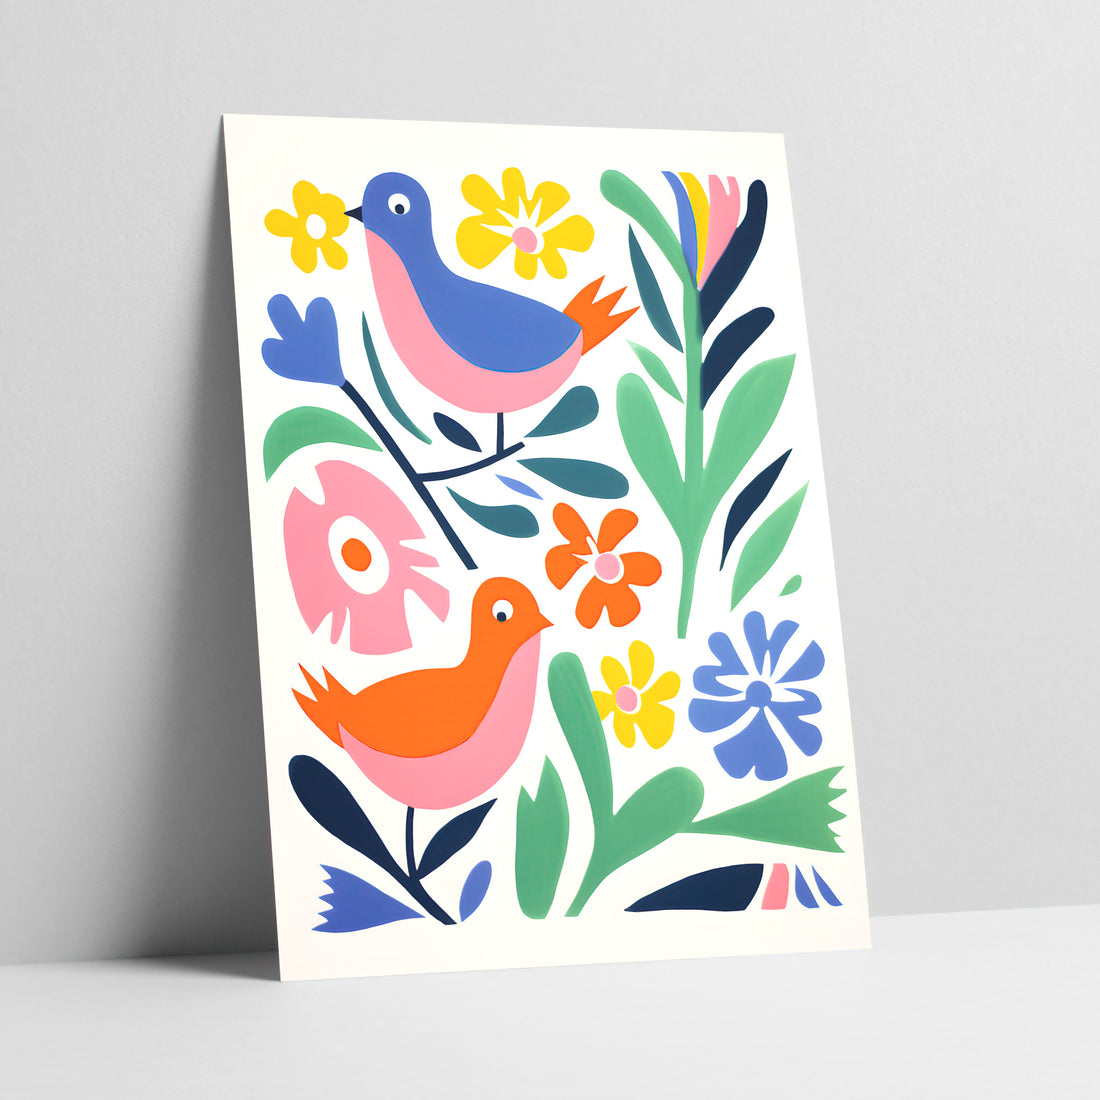 Folk art birds among vibrant flowers print